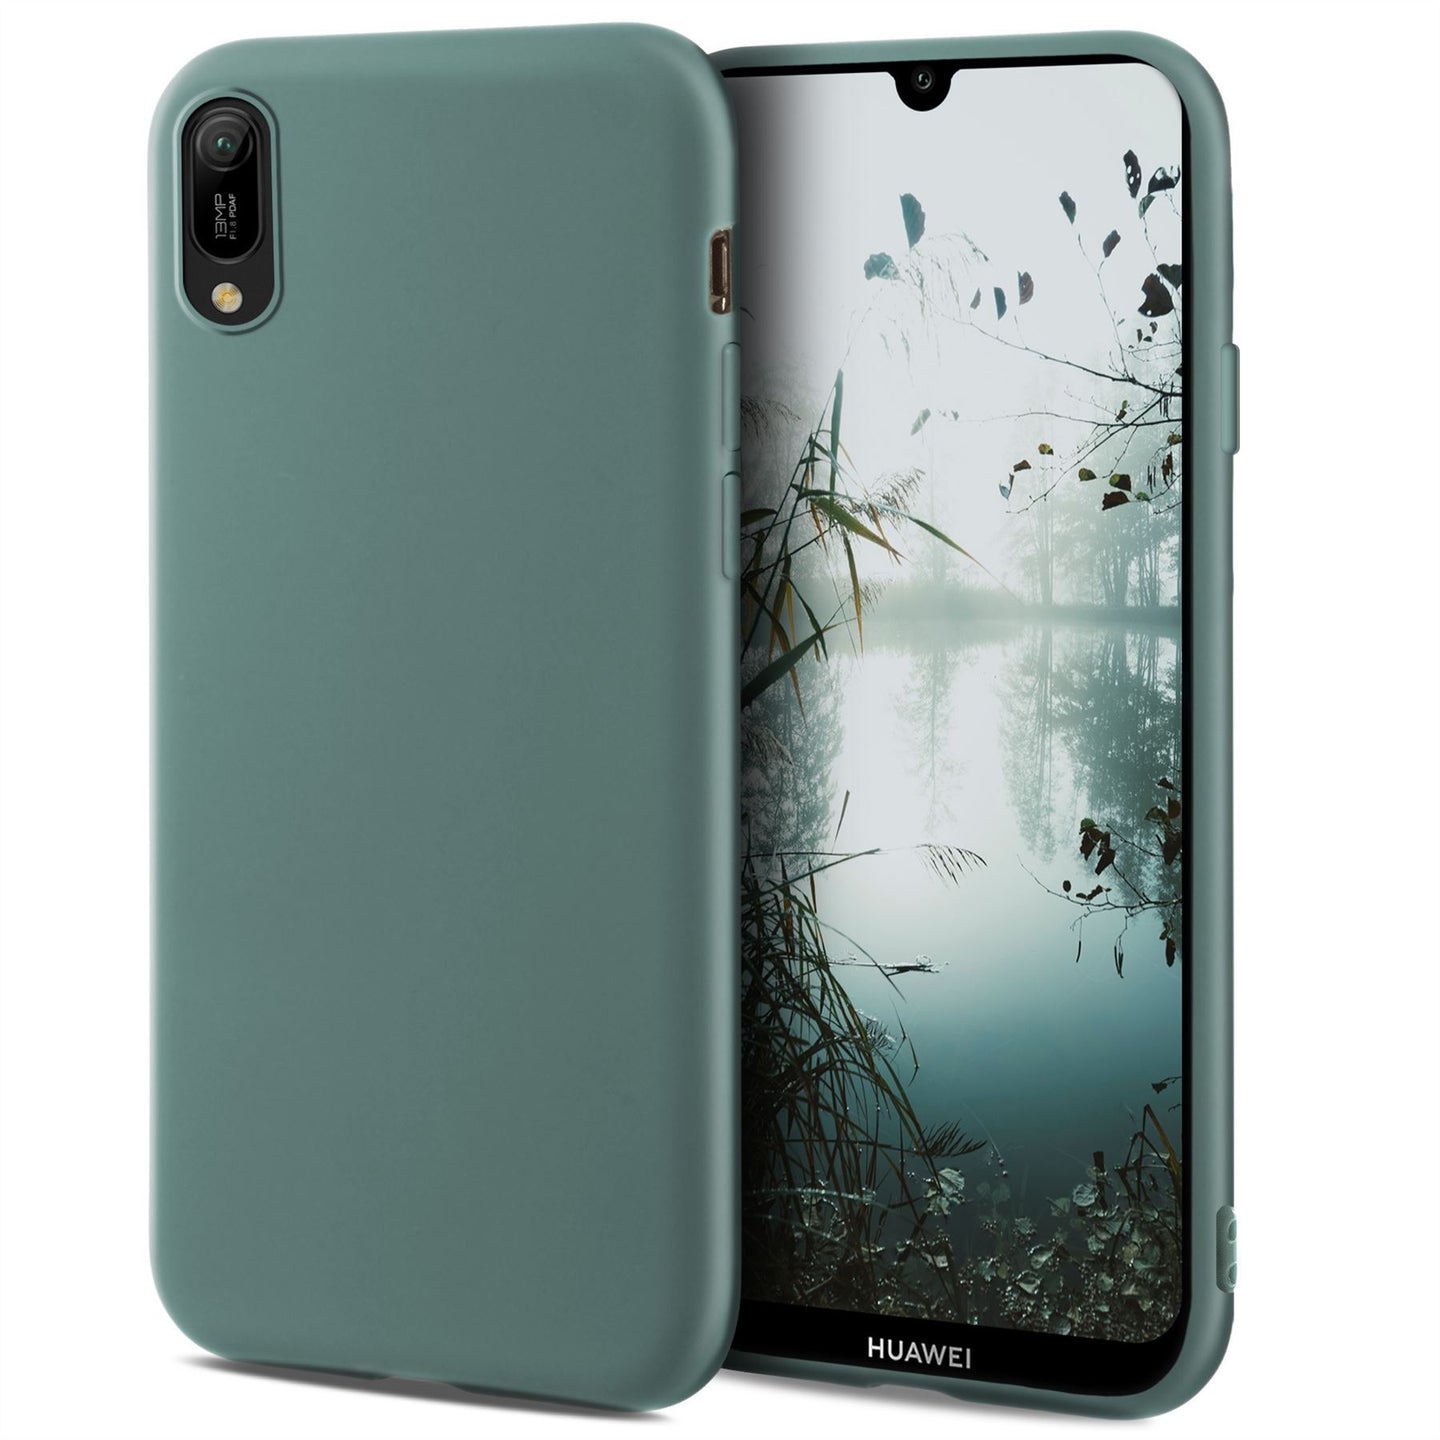 Moozy Minimalist Series Silicone Case for Huawei Y6 2019, Blue Grey - Matte Finish Slim Soft TPU Cover